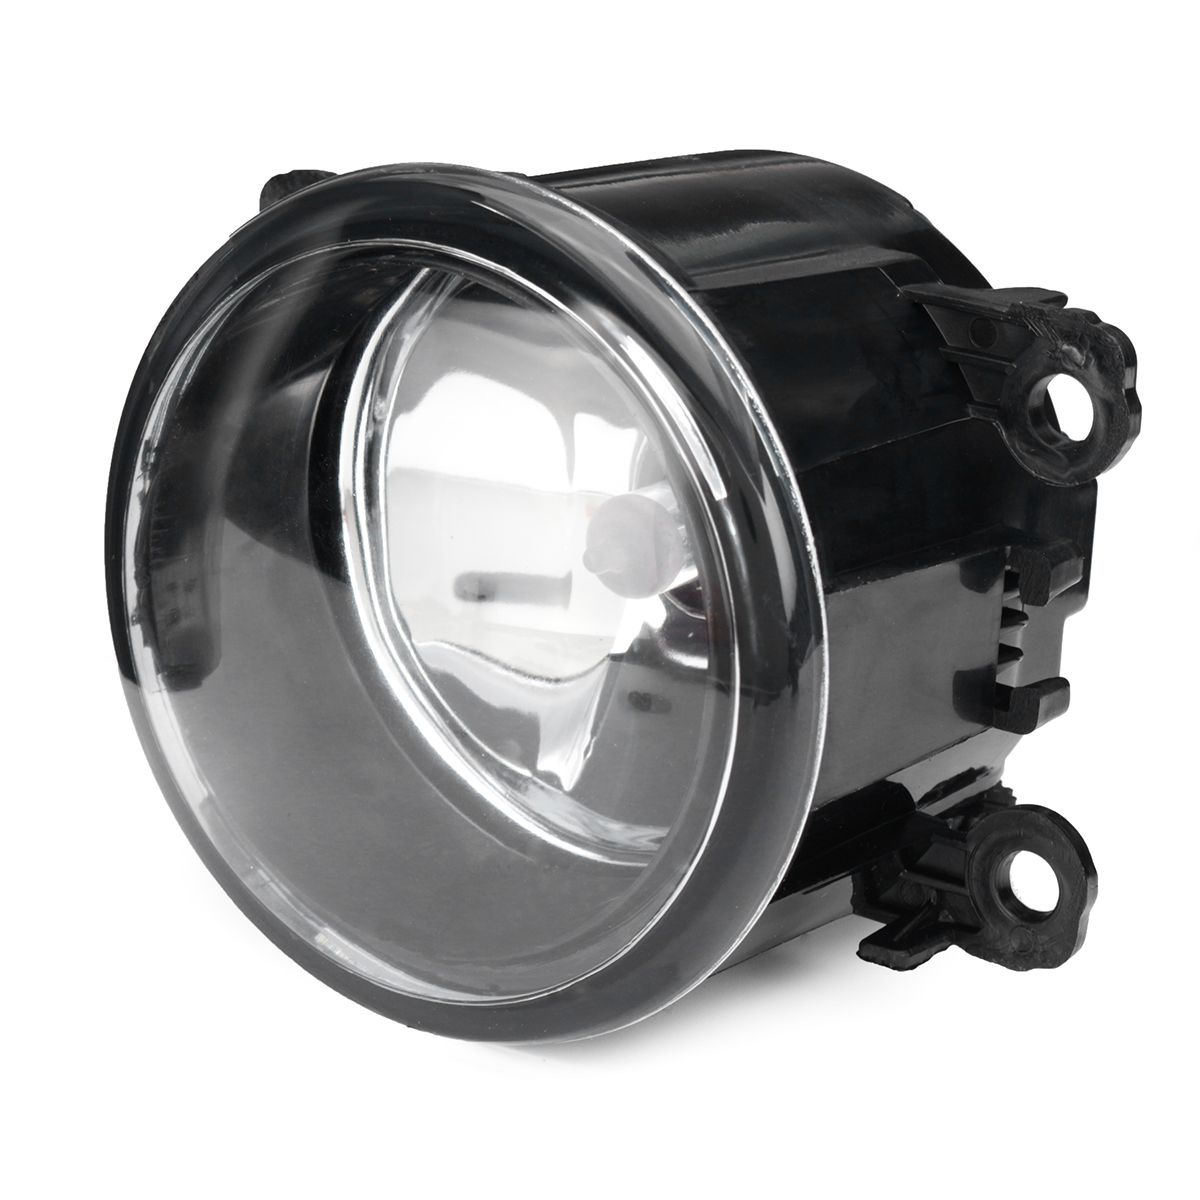 2Pcs-Car-Front-Fog-Lights-With-Wiring-H11-Bulbs-Relay-Kit-For-Suzuki-SX4-Grand-Vitara-2006-2012-1674363